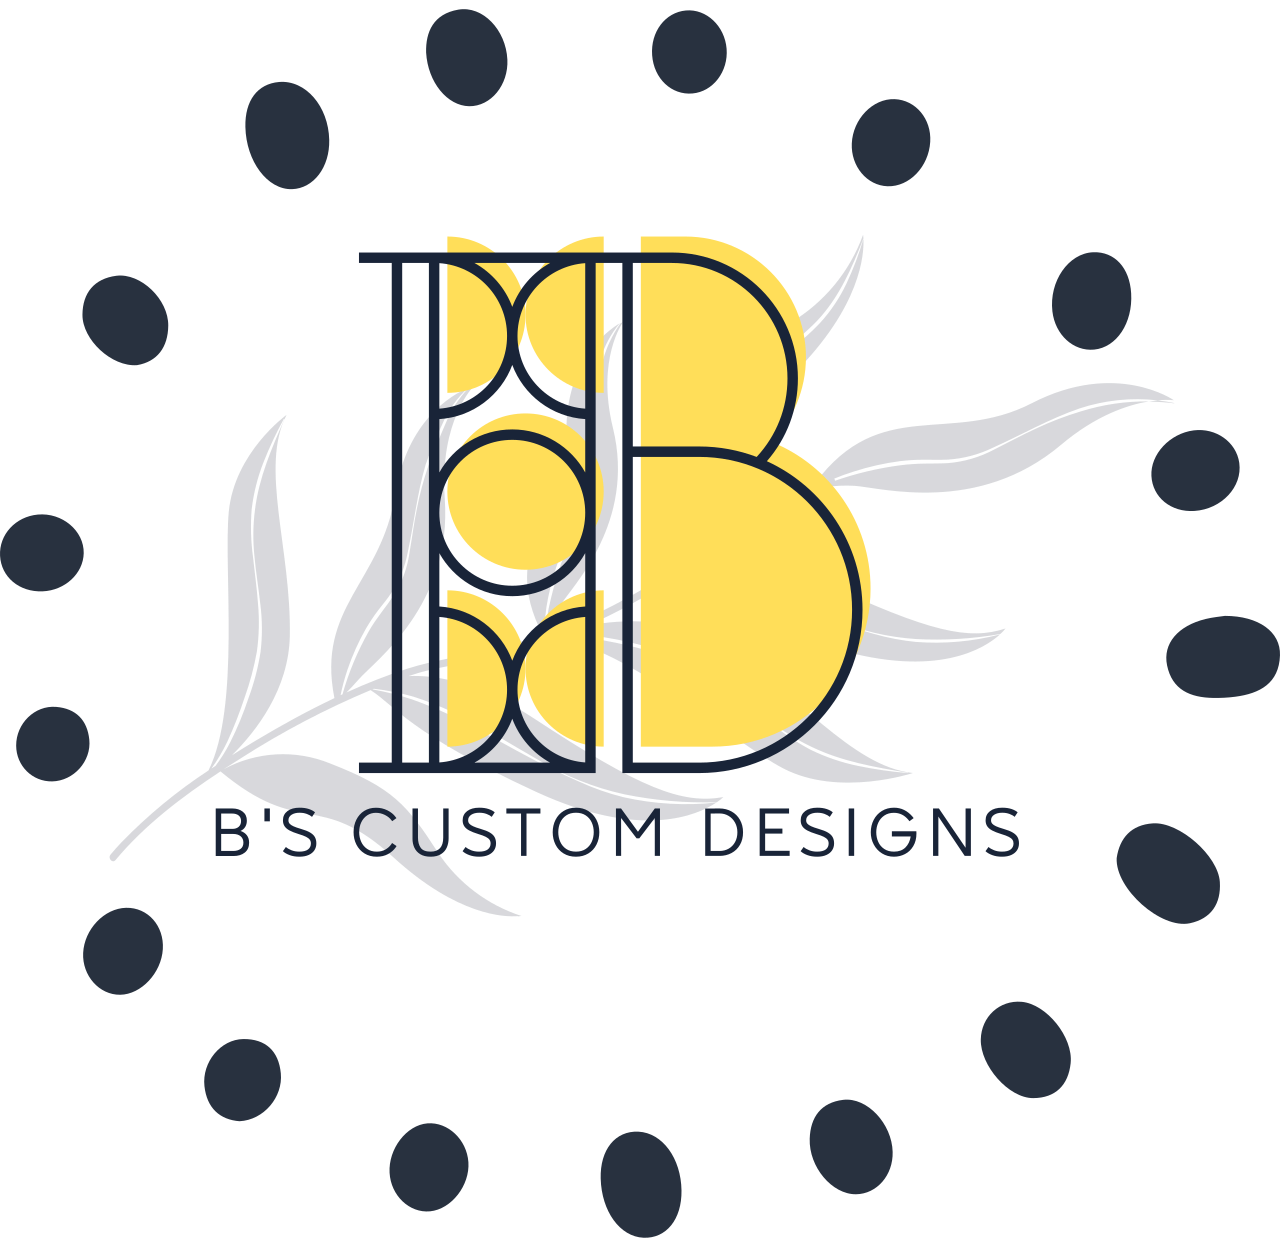 B's Custom Designs's logo